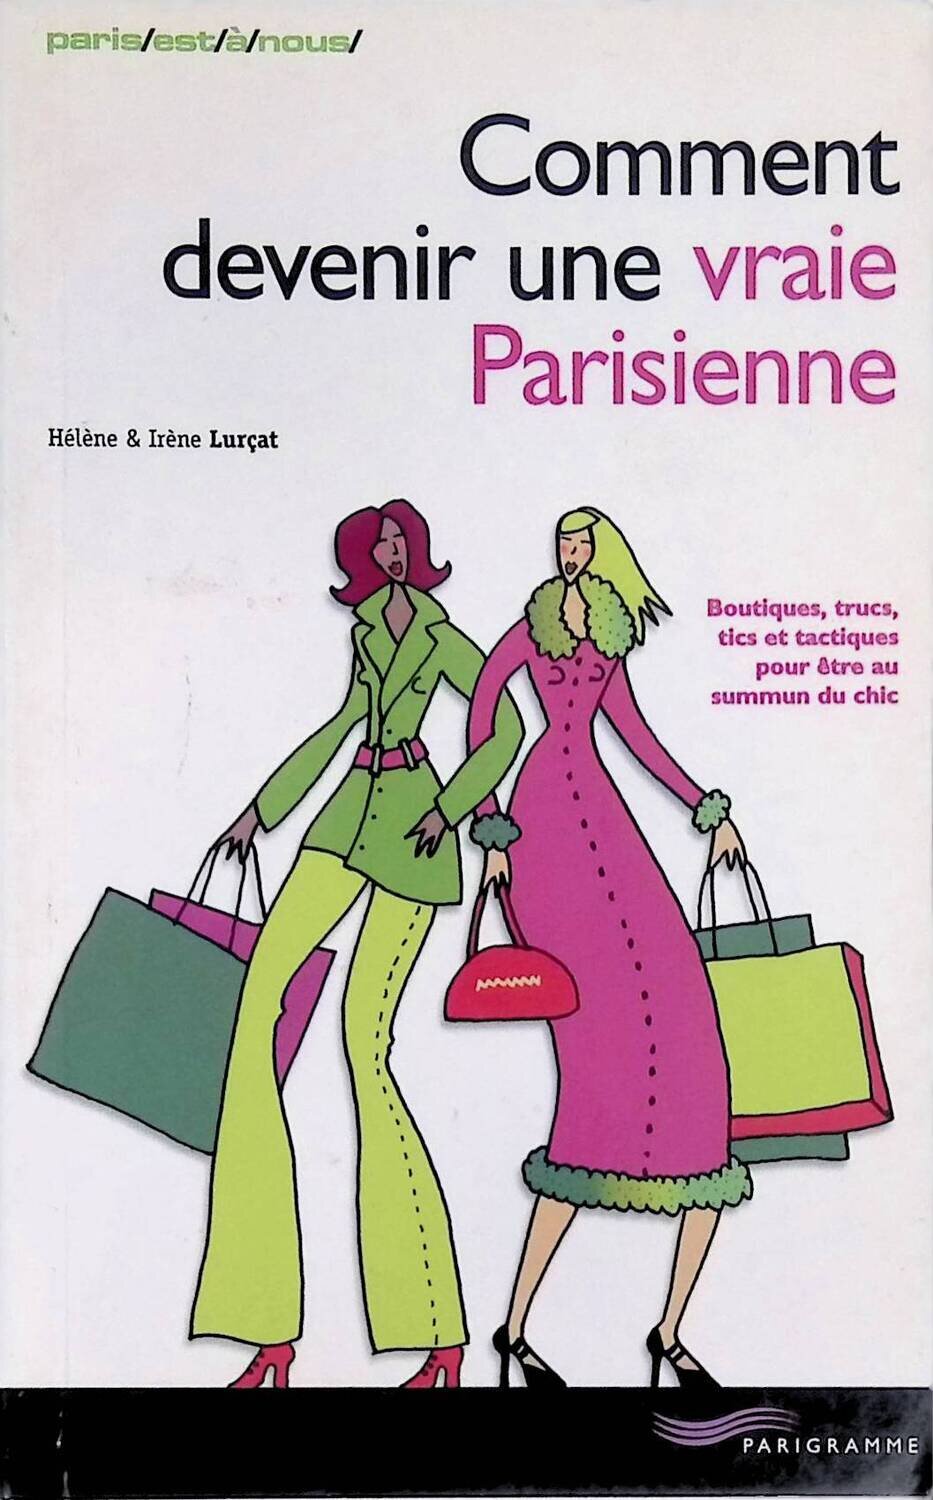 Comment devenir une vraie parisienne; Helene Lurcat, Irene Lurcat